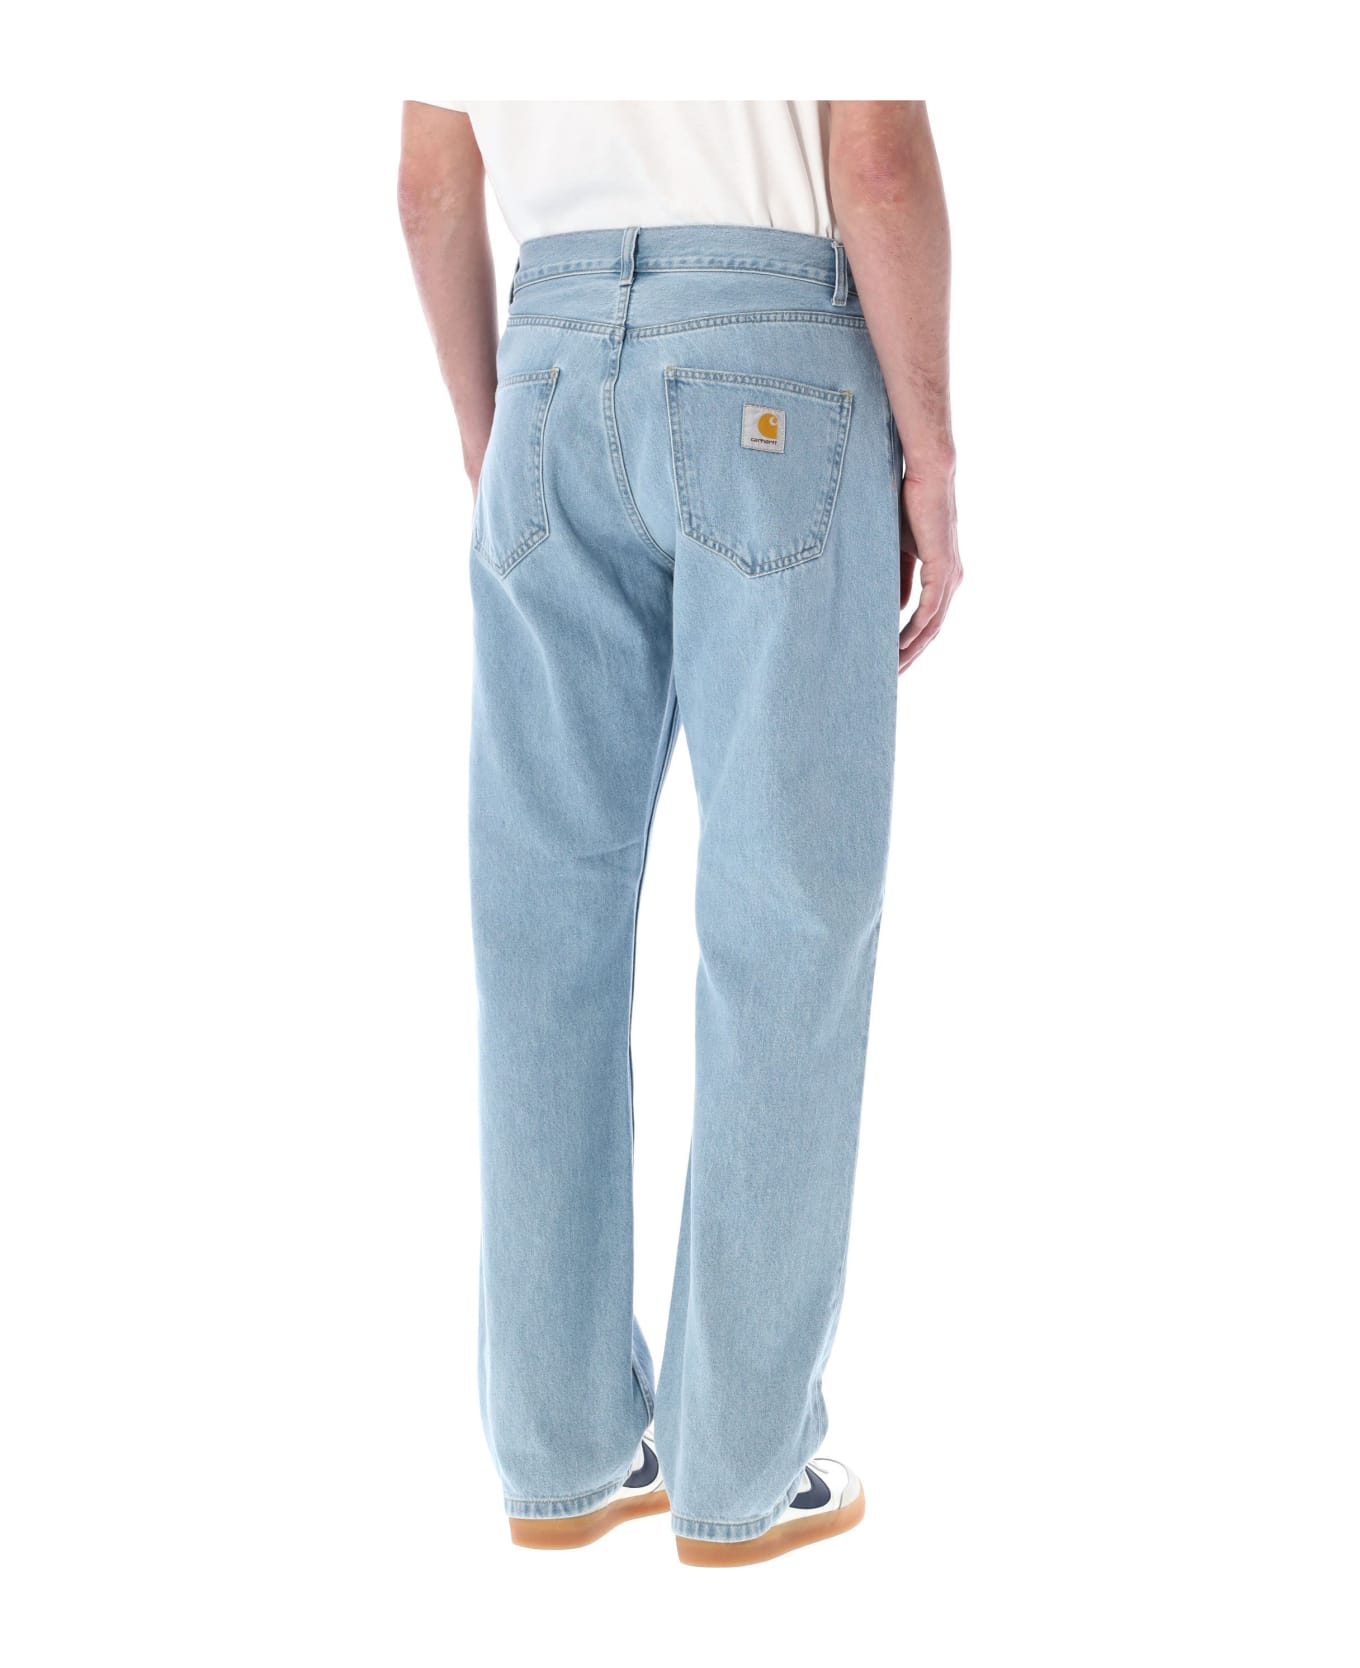 Carhartt Nolan Jeans - BLUE BLITCHED